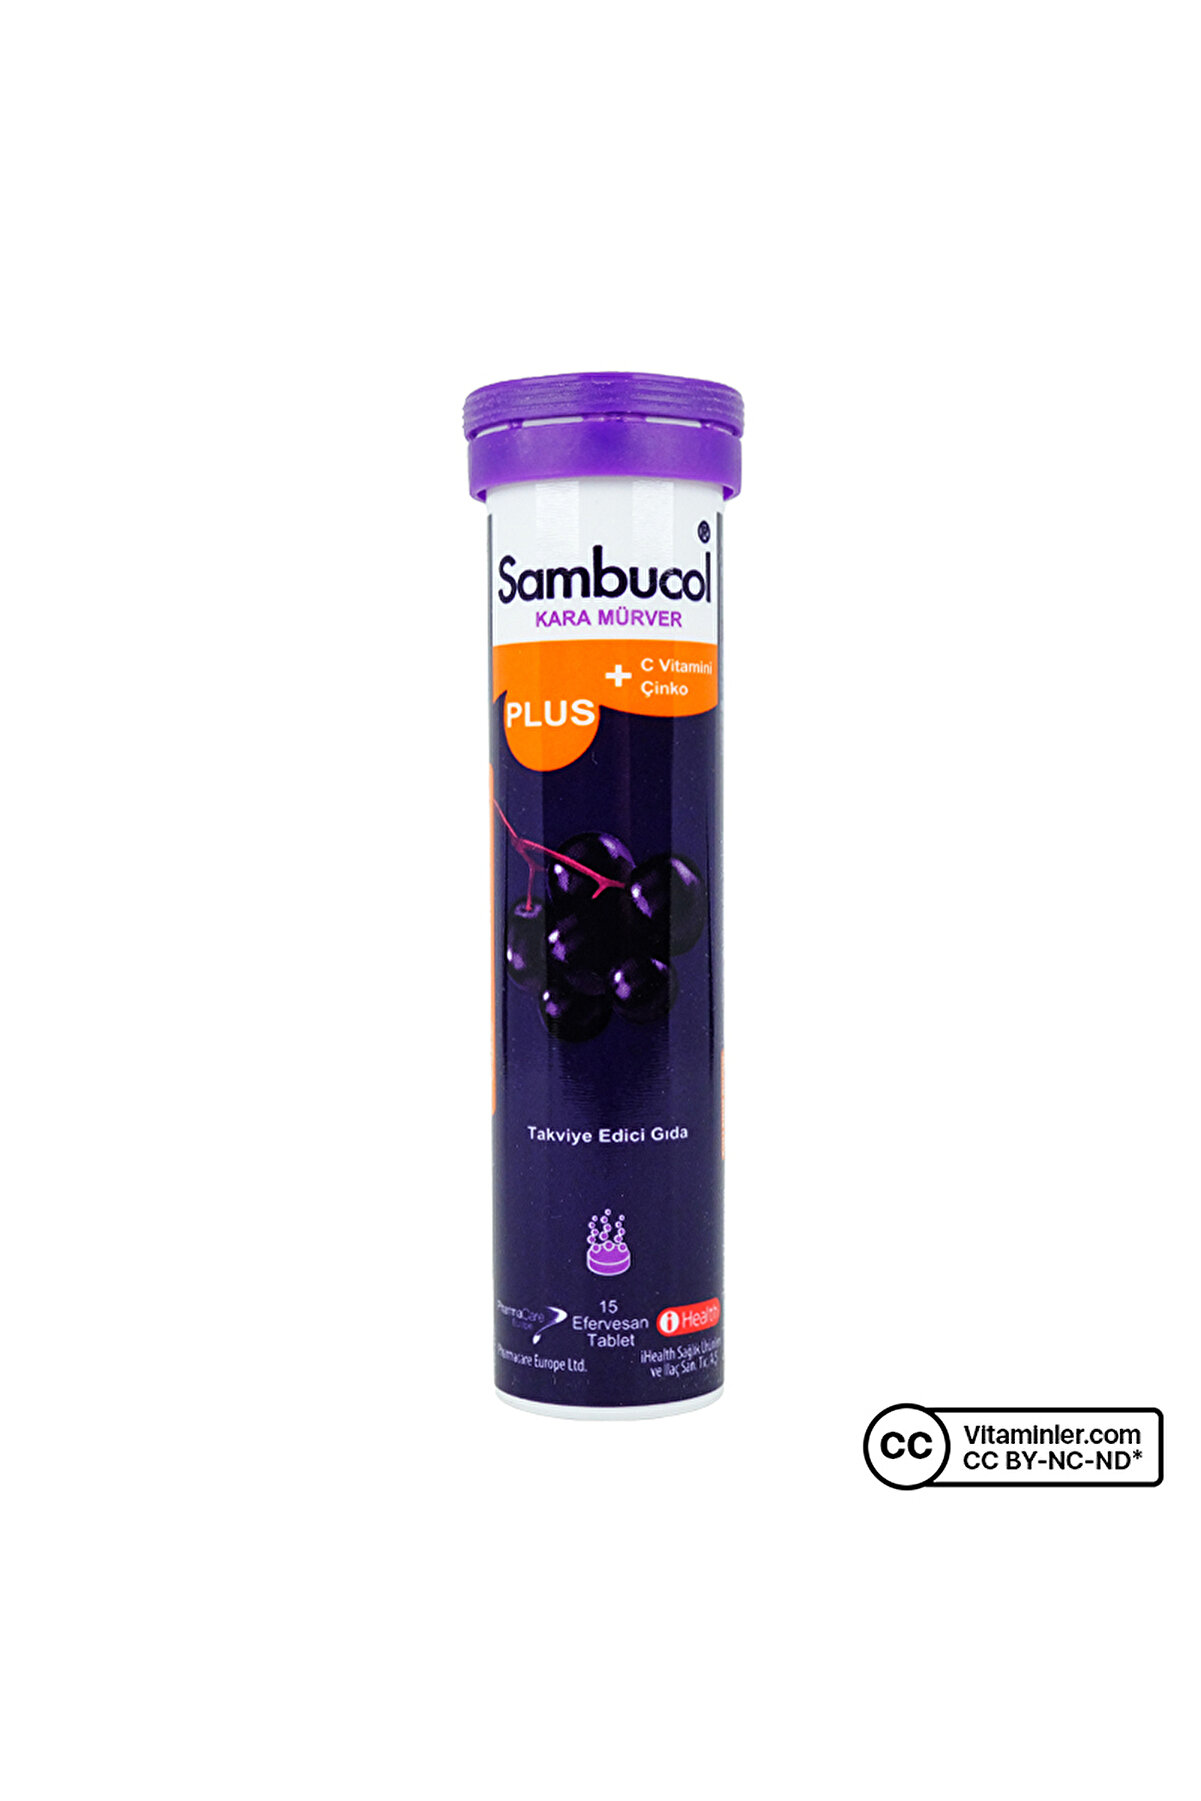 Sambucol Plus Kara Mürver + C Vitamini Çinko Takviye Edici Gıda 15 Tablet